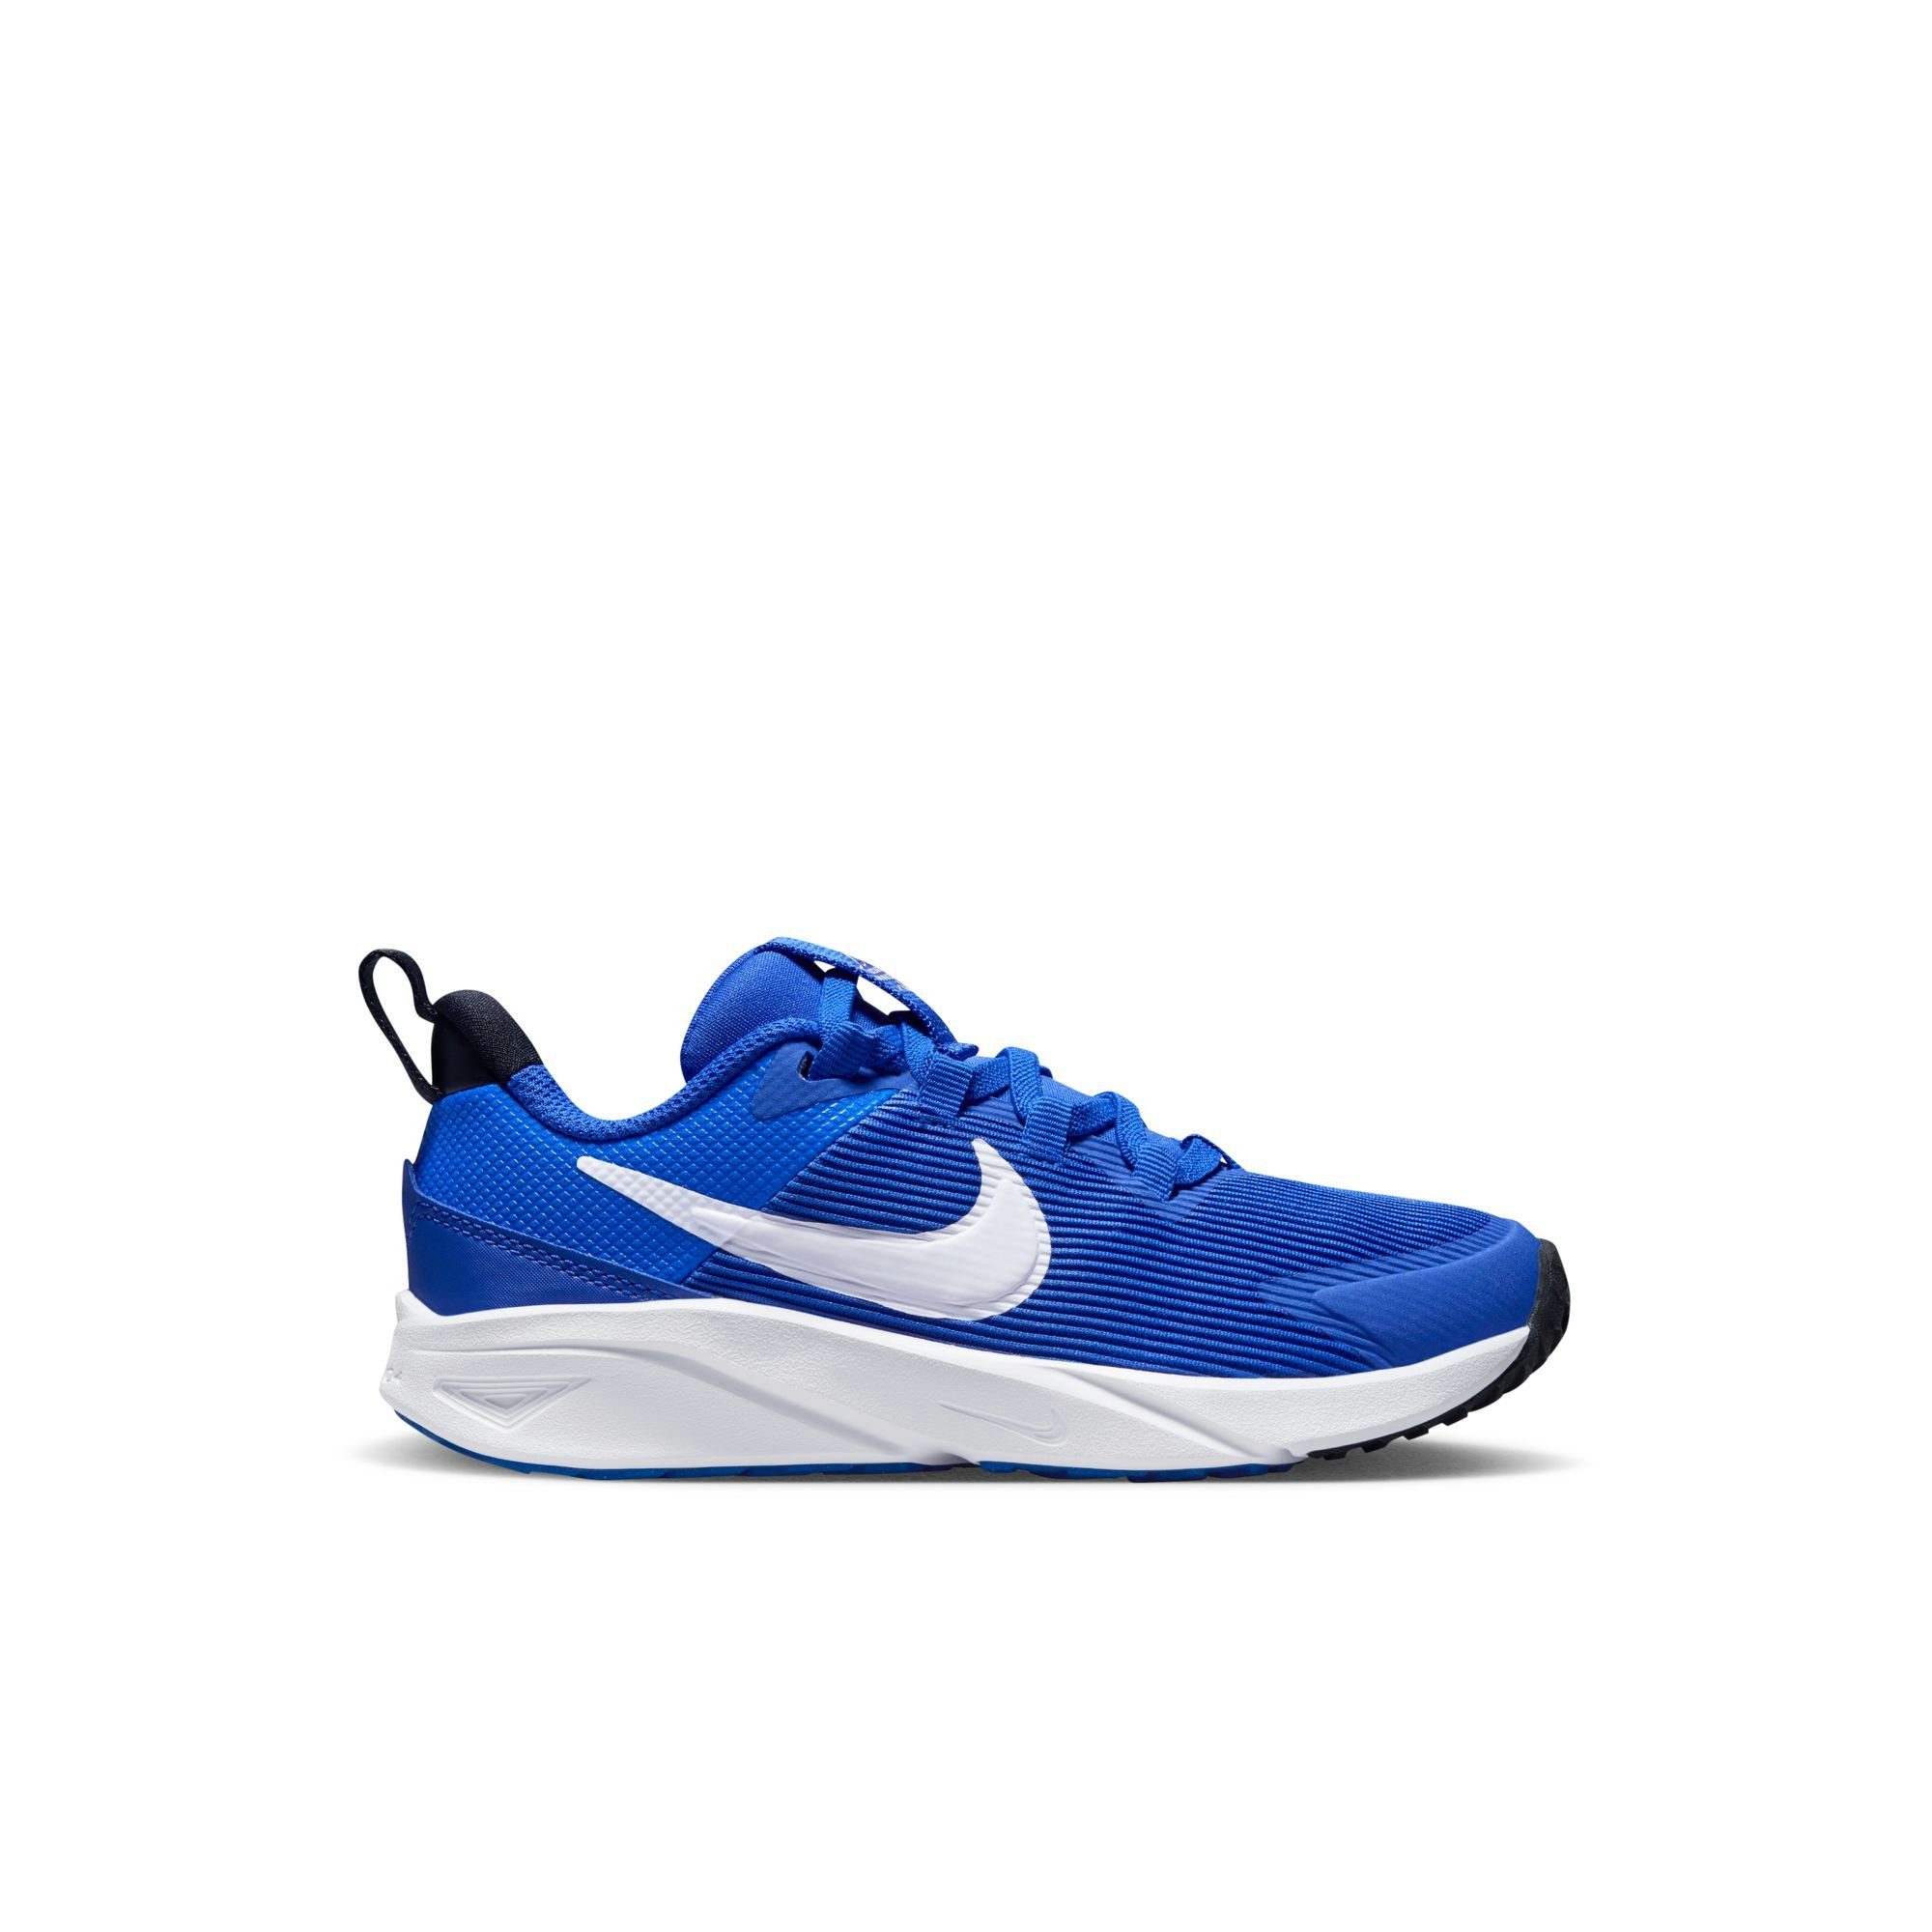 STAR 4 blau RUNNER (PS) Laufschuh Nike